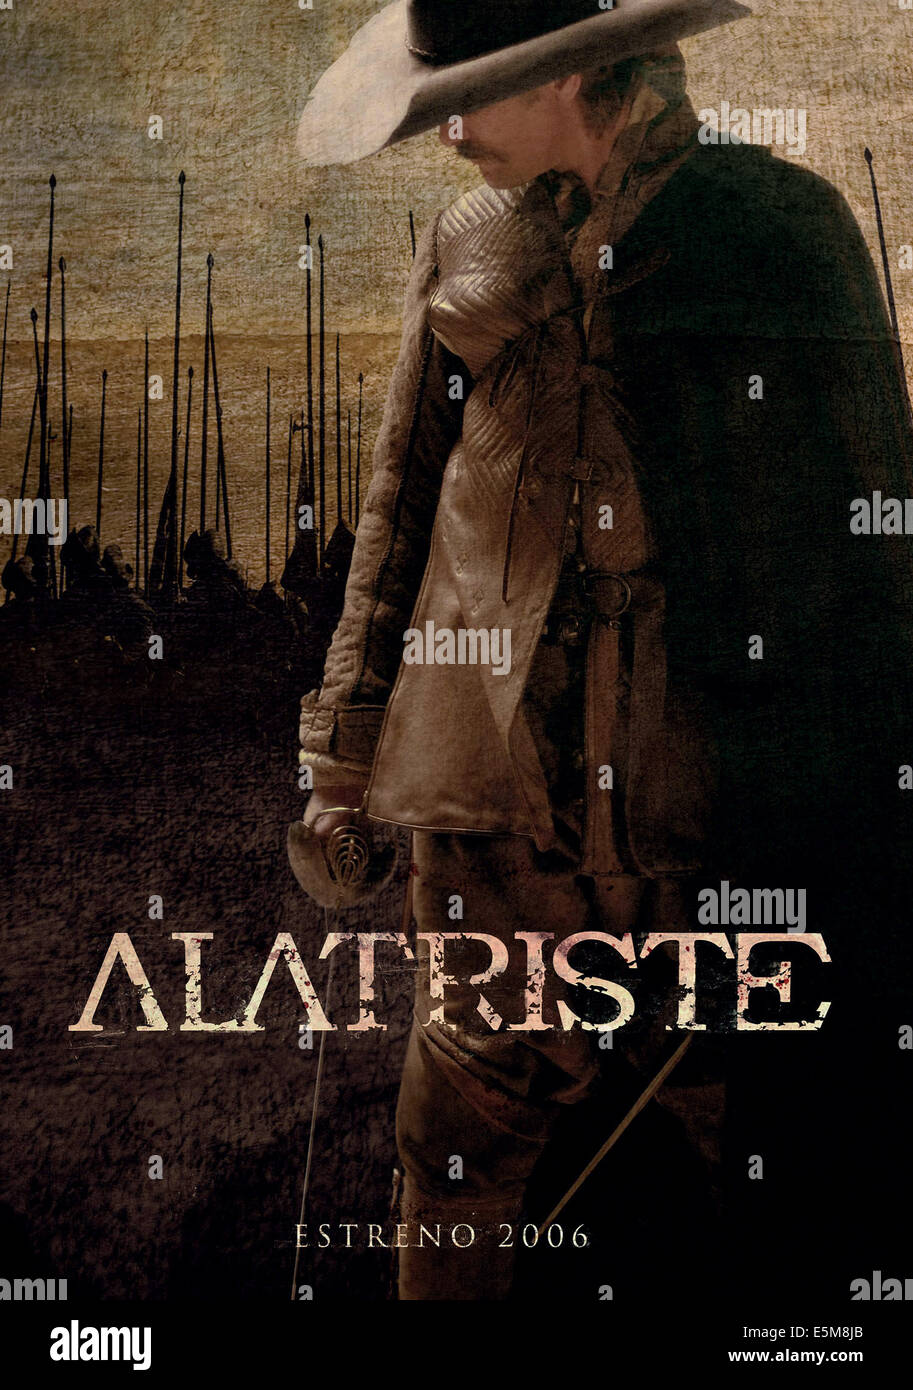 ALATRISTE, Viggo Mortensen, 2006. Stock Photo